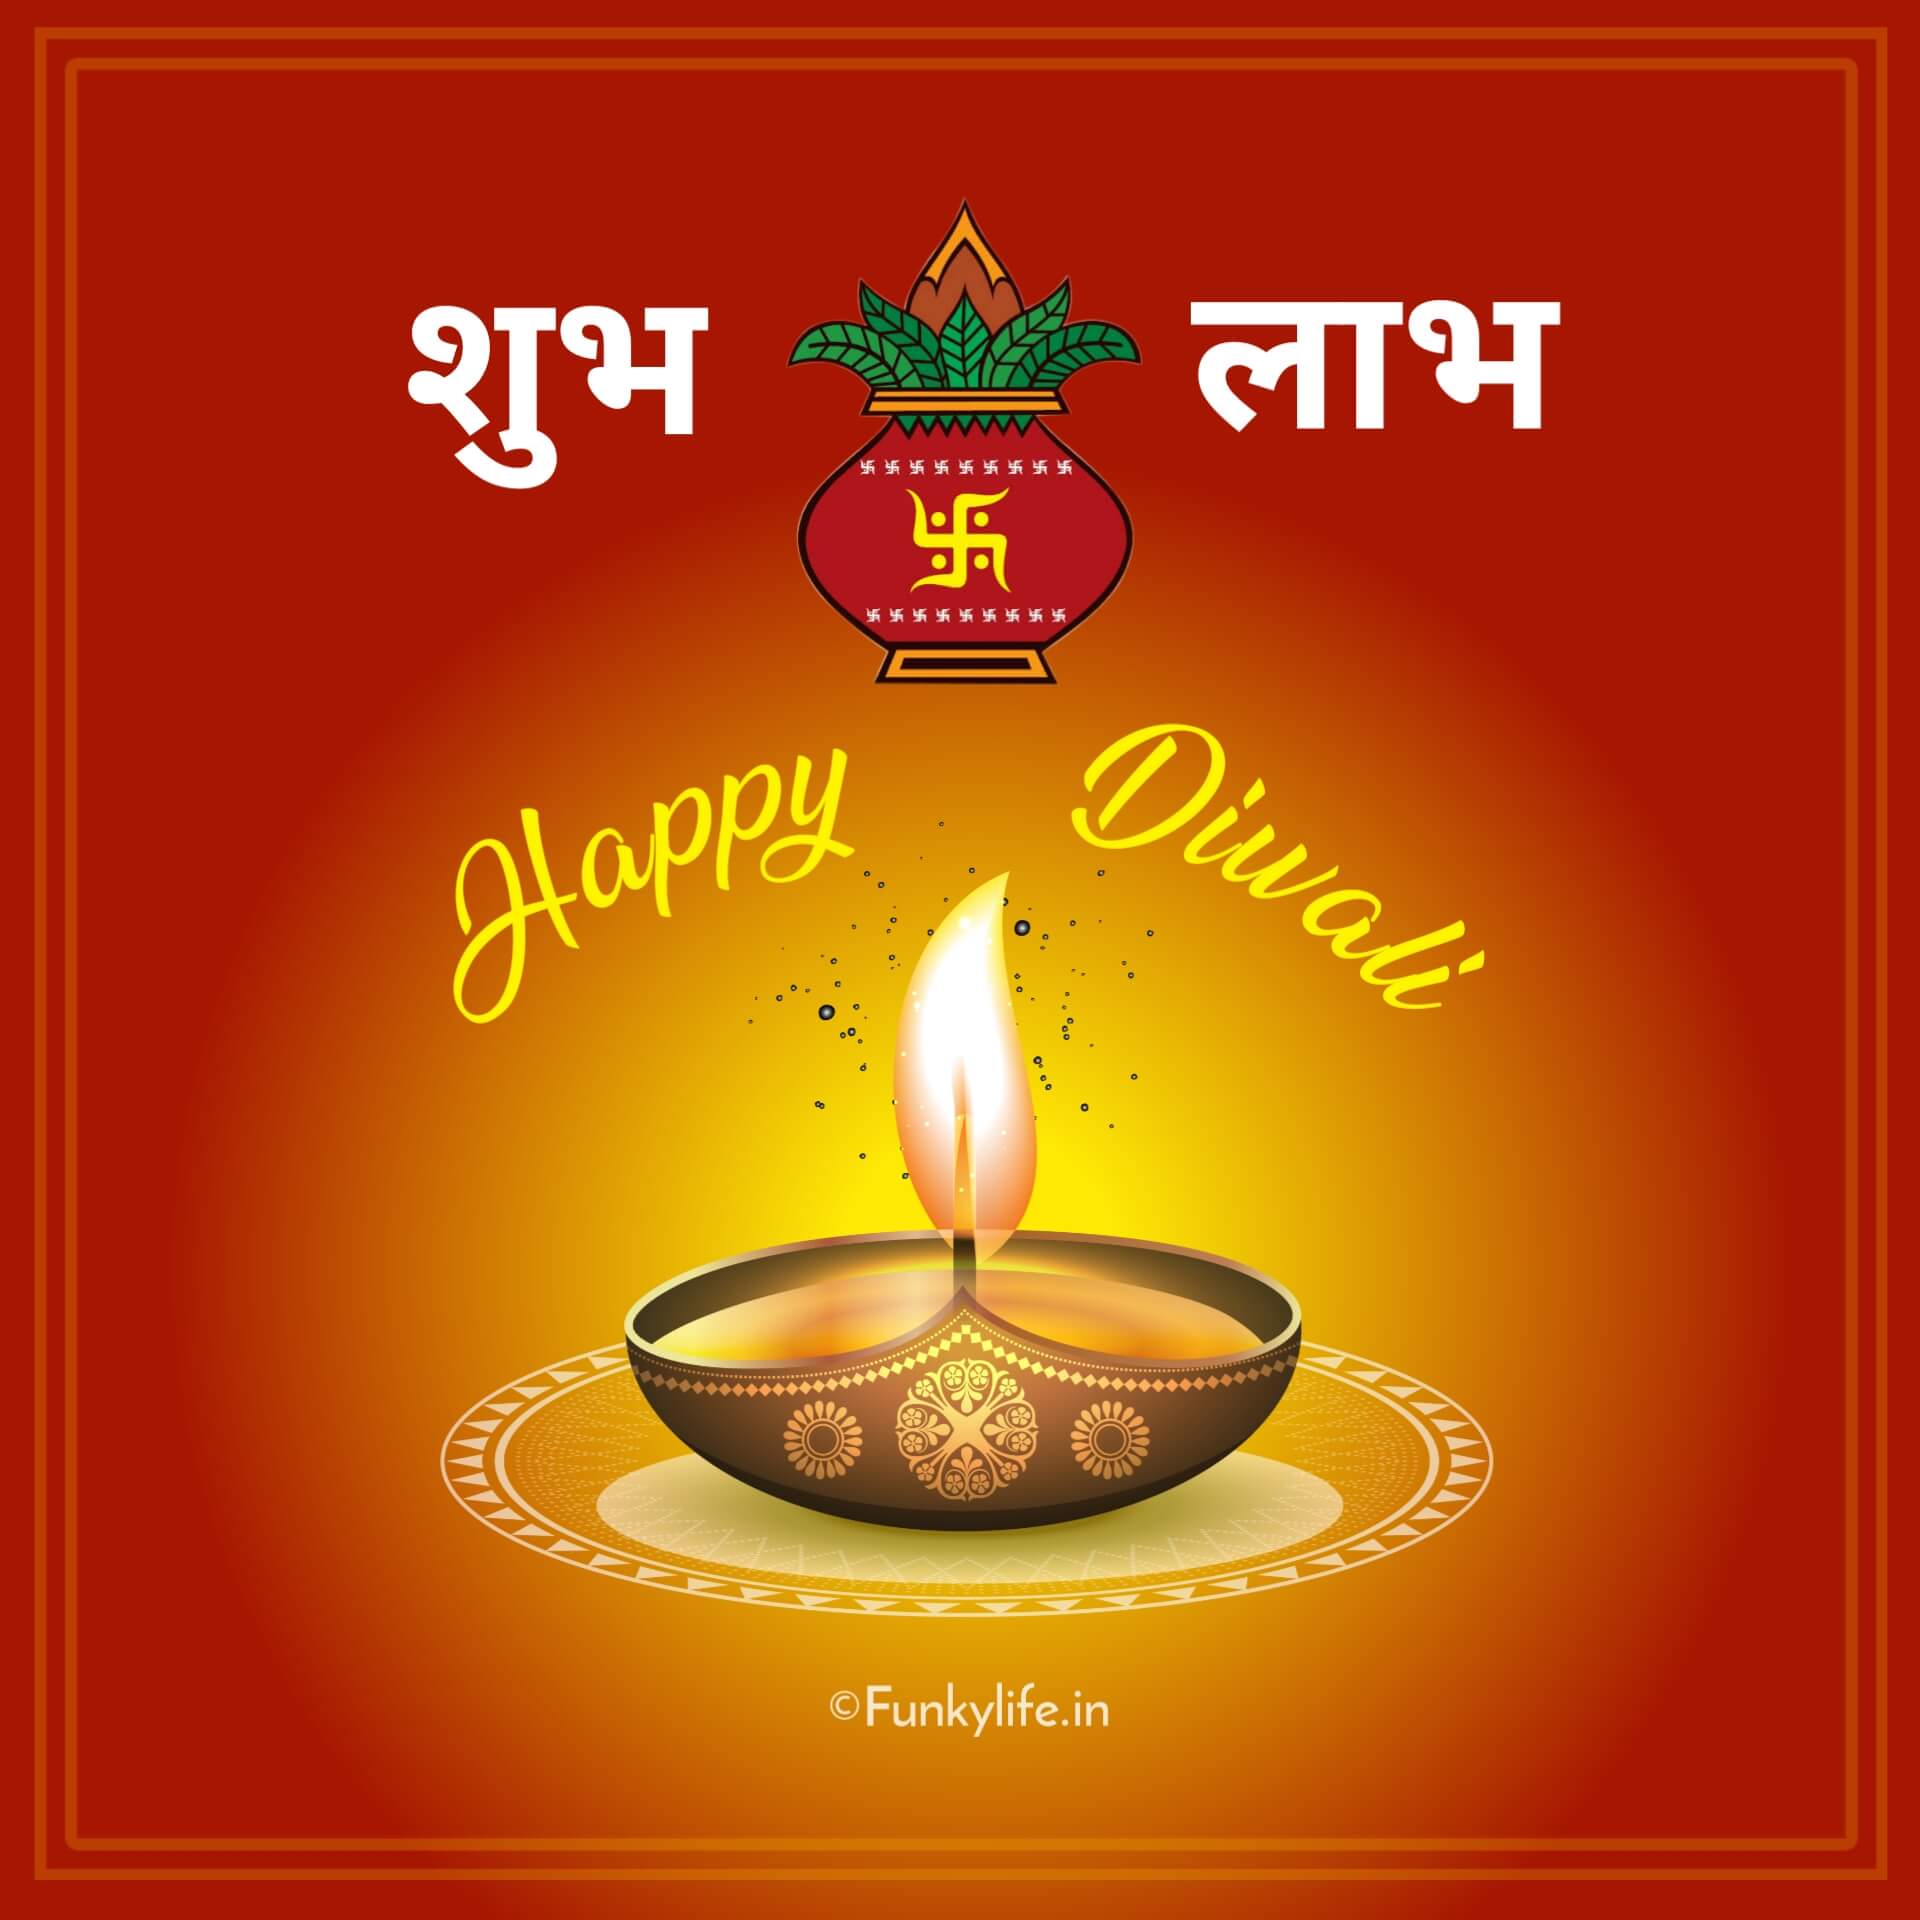 Hindi Diwali Images for WhatsApp